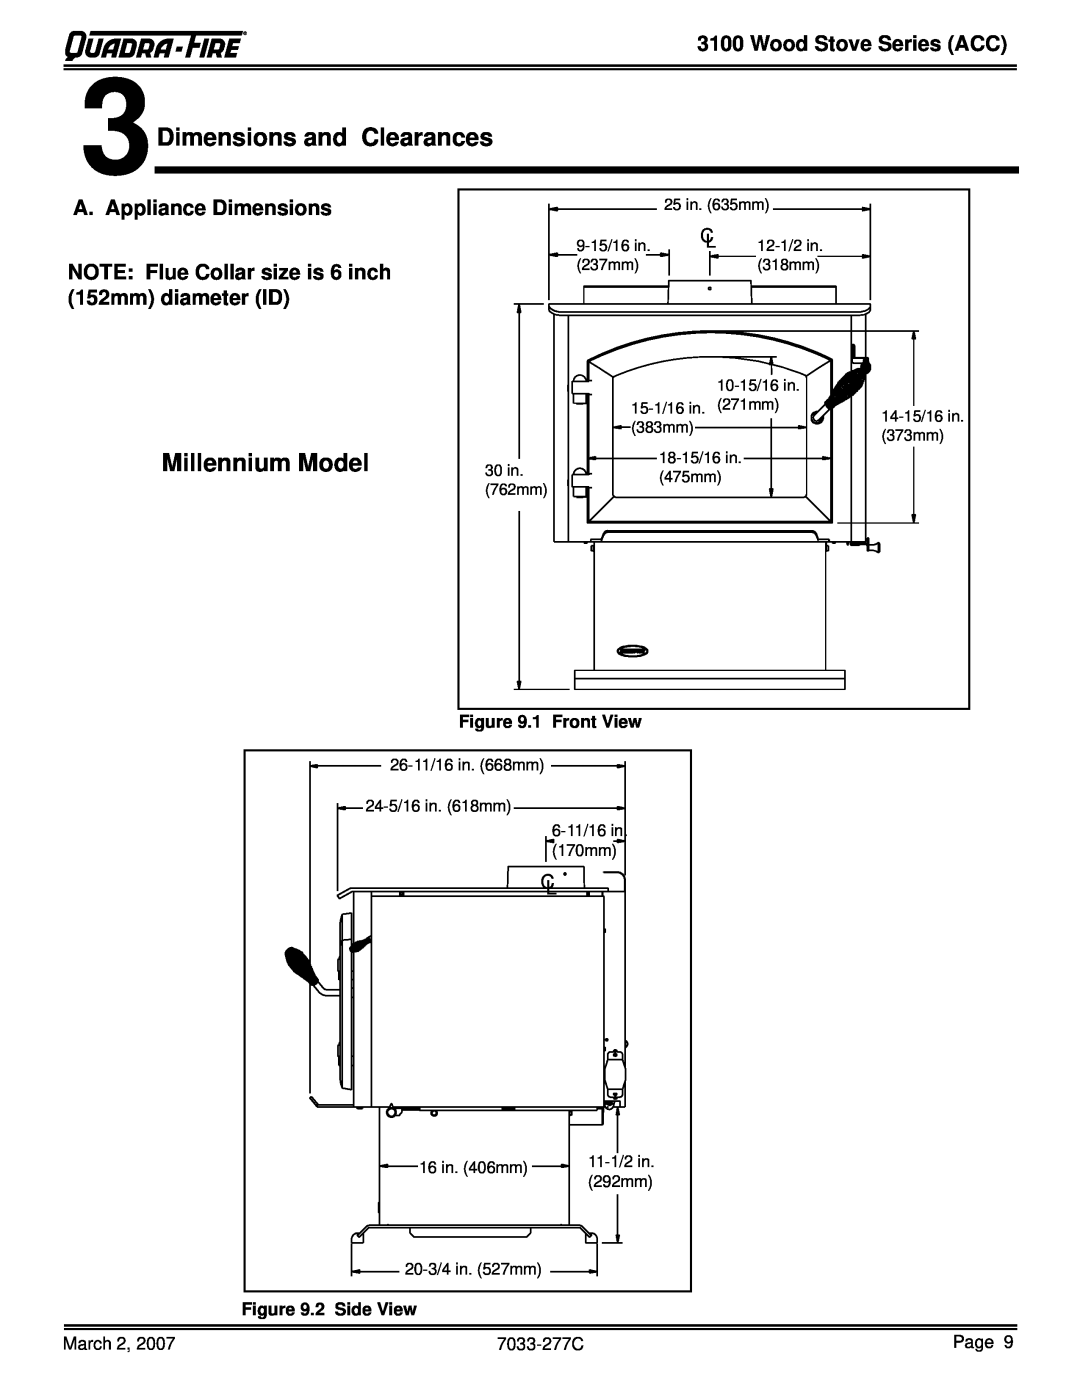 Quadra-Fire 31M-ACC-GT 3Dimensions and Clearances, Millennium Model, Wood Stove Series ACC, A. Appliance Dimensions 